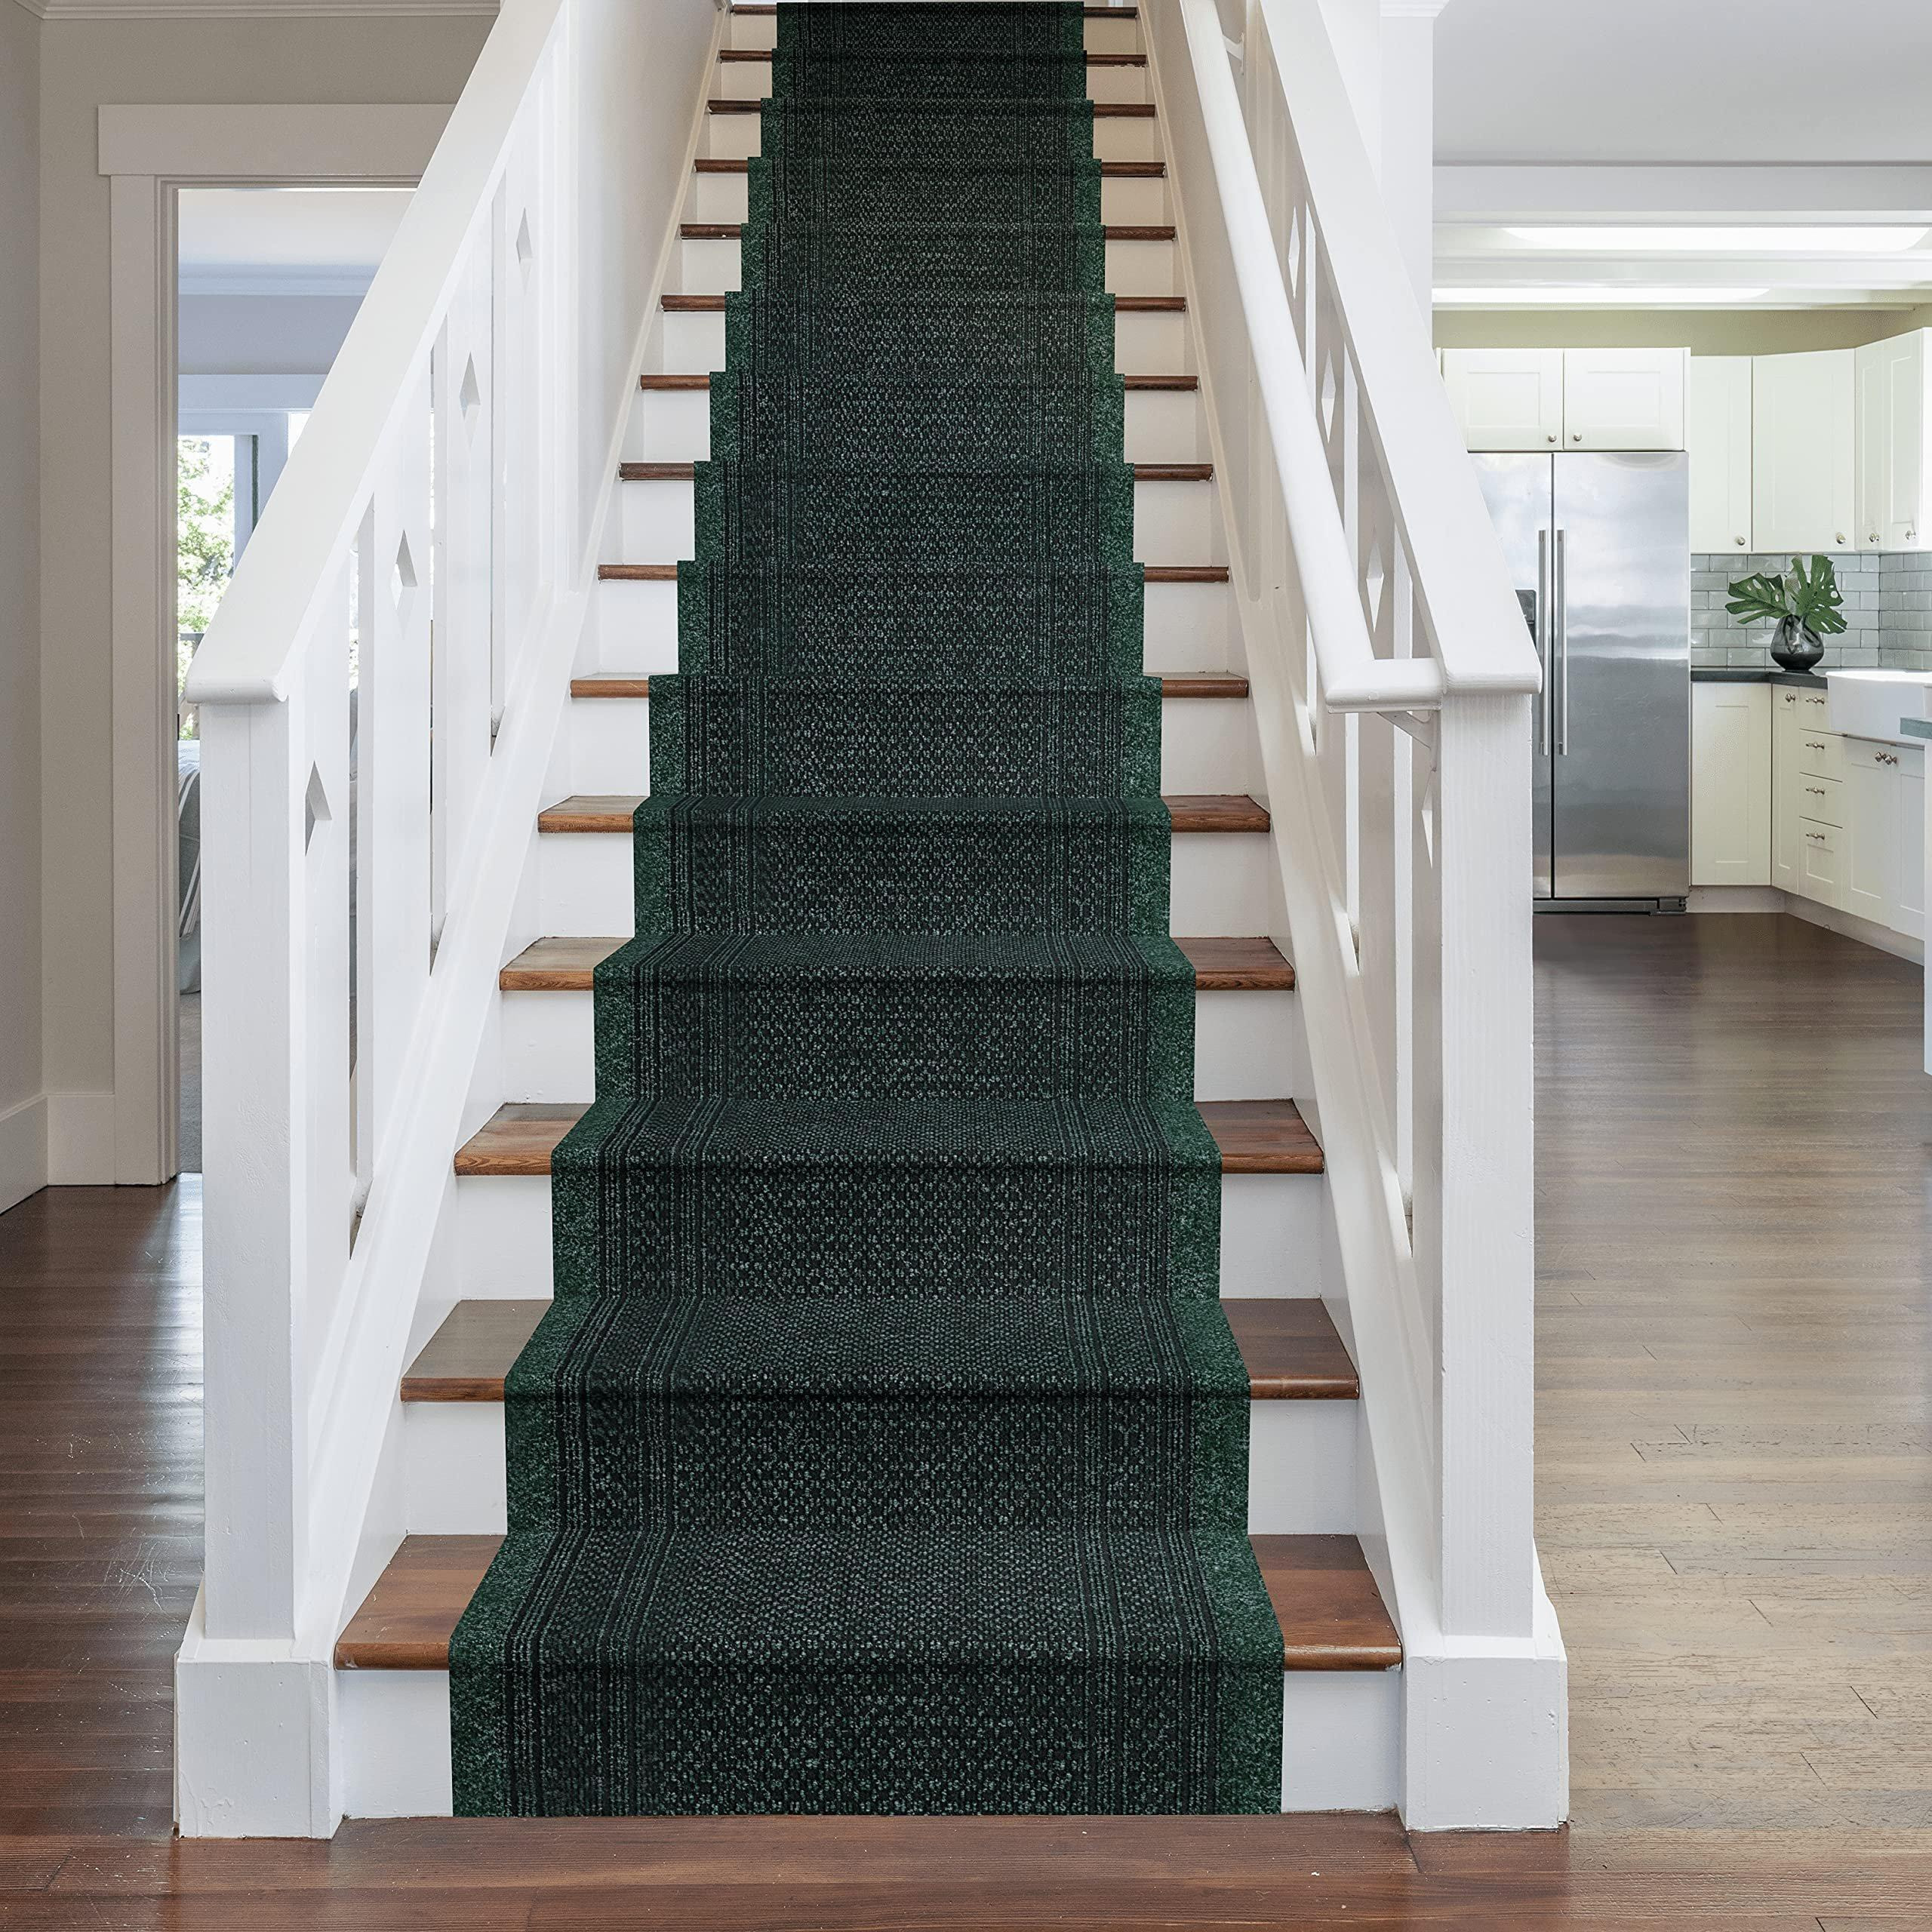 Green Aztec Stair Carpet Runner - image 1